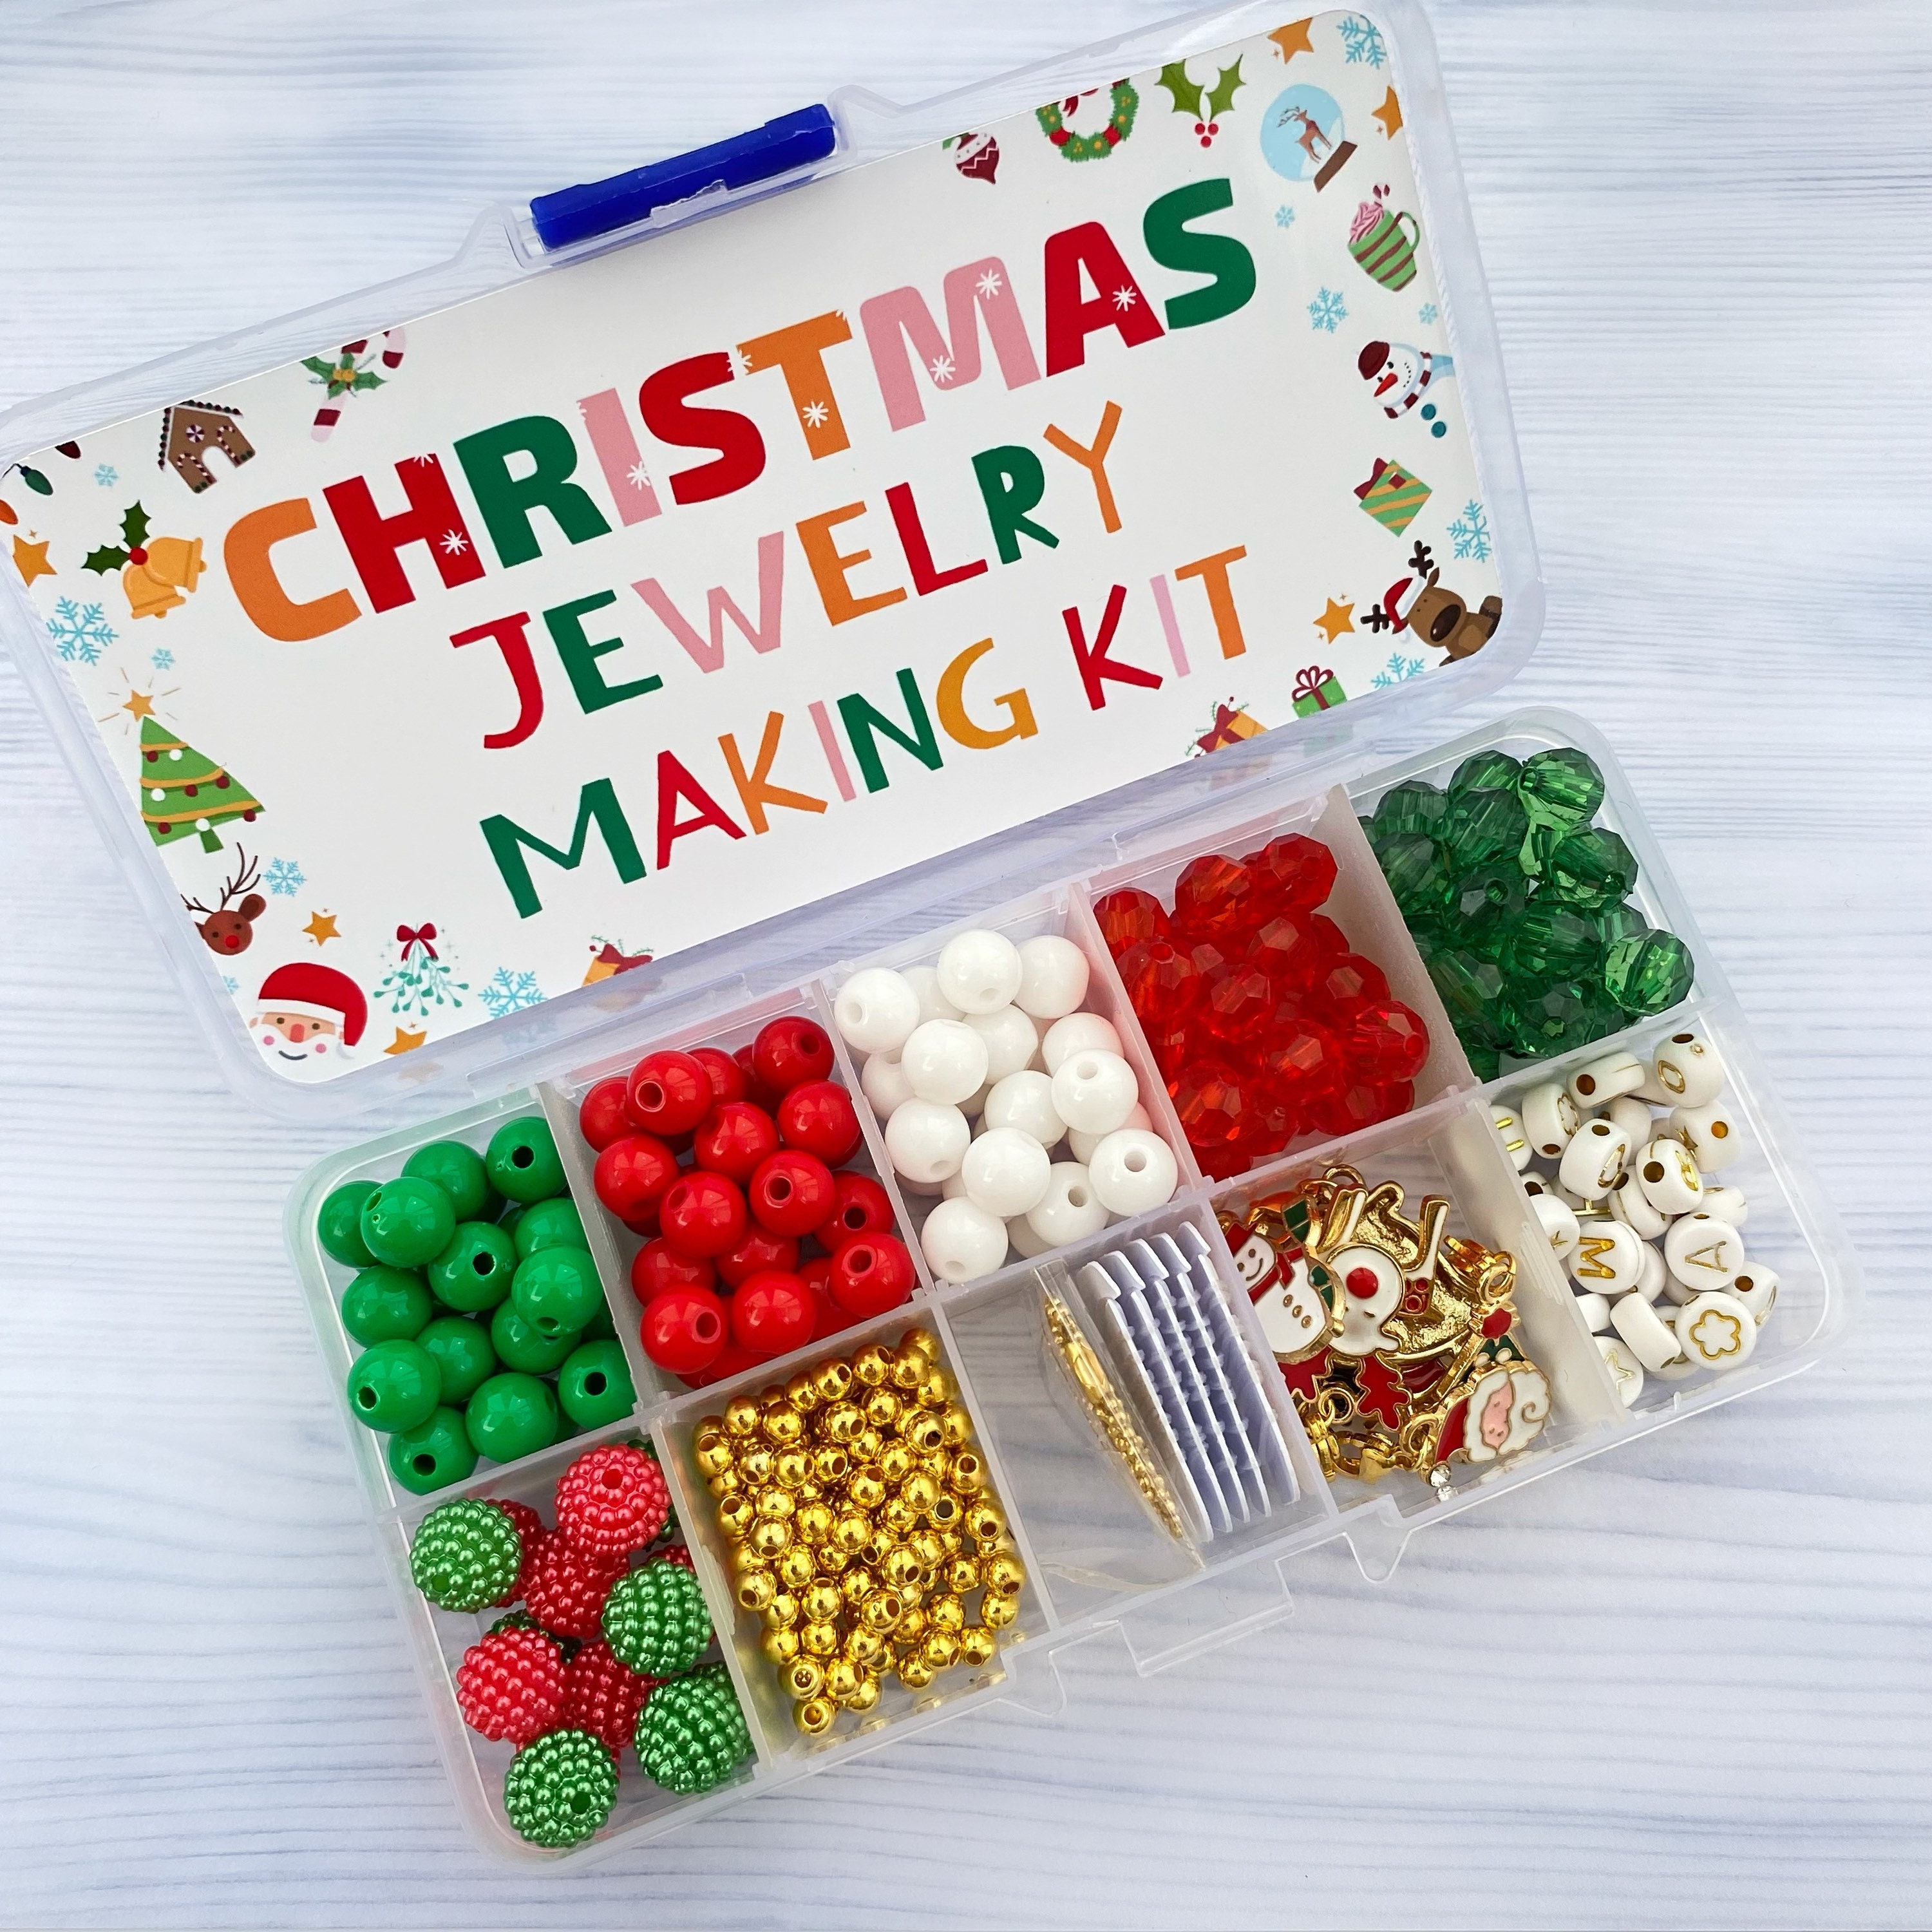 Insma-x Jewelry Making Kit Jewelry Making Supplies Christmas Gift